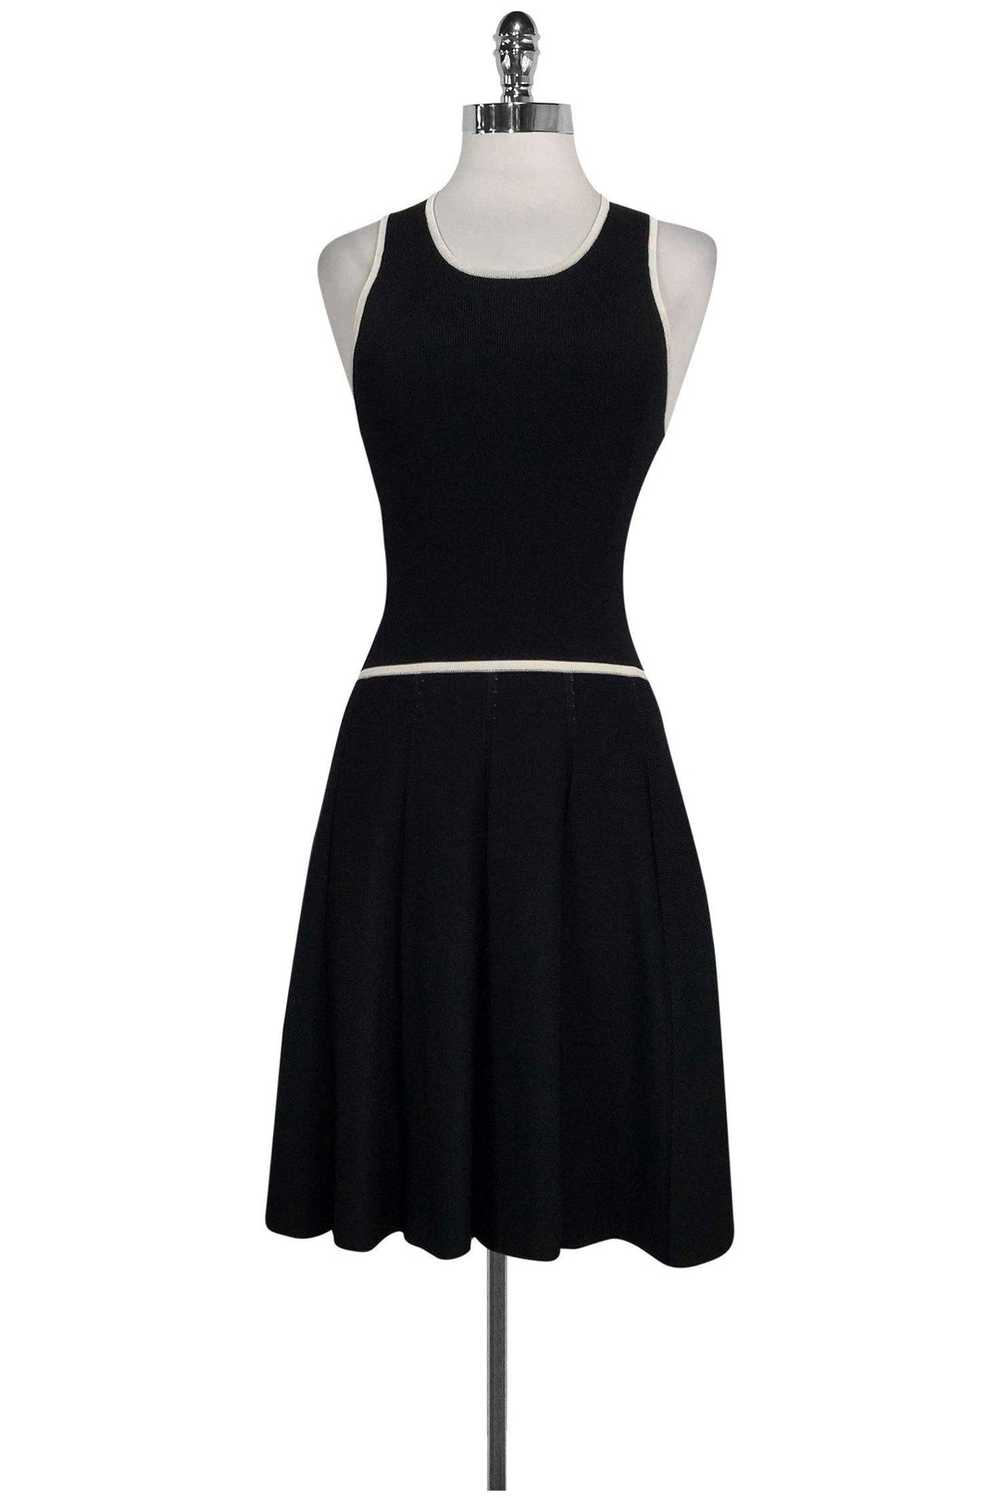 Parker - Black & White Trim Dress Sz XS - image 1